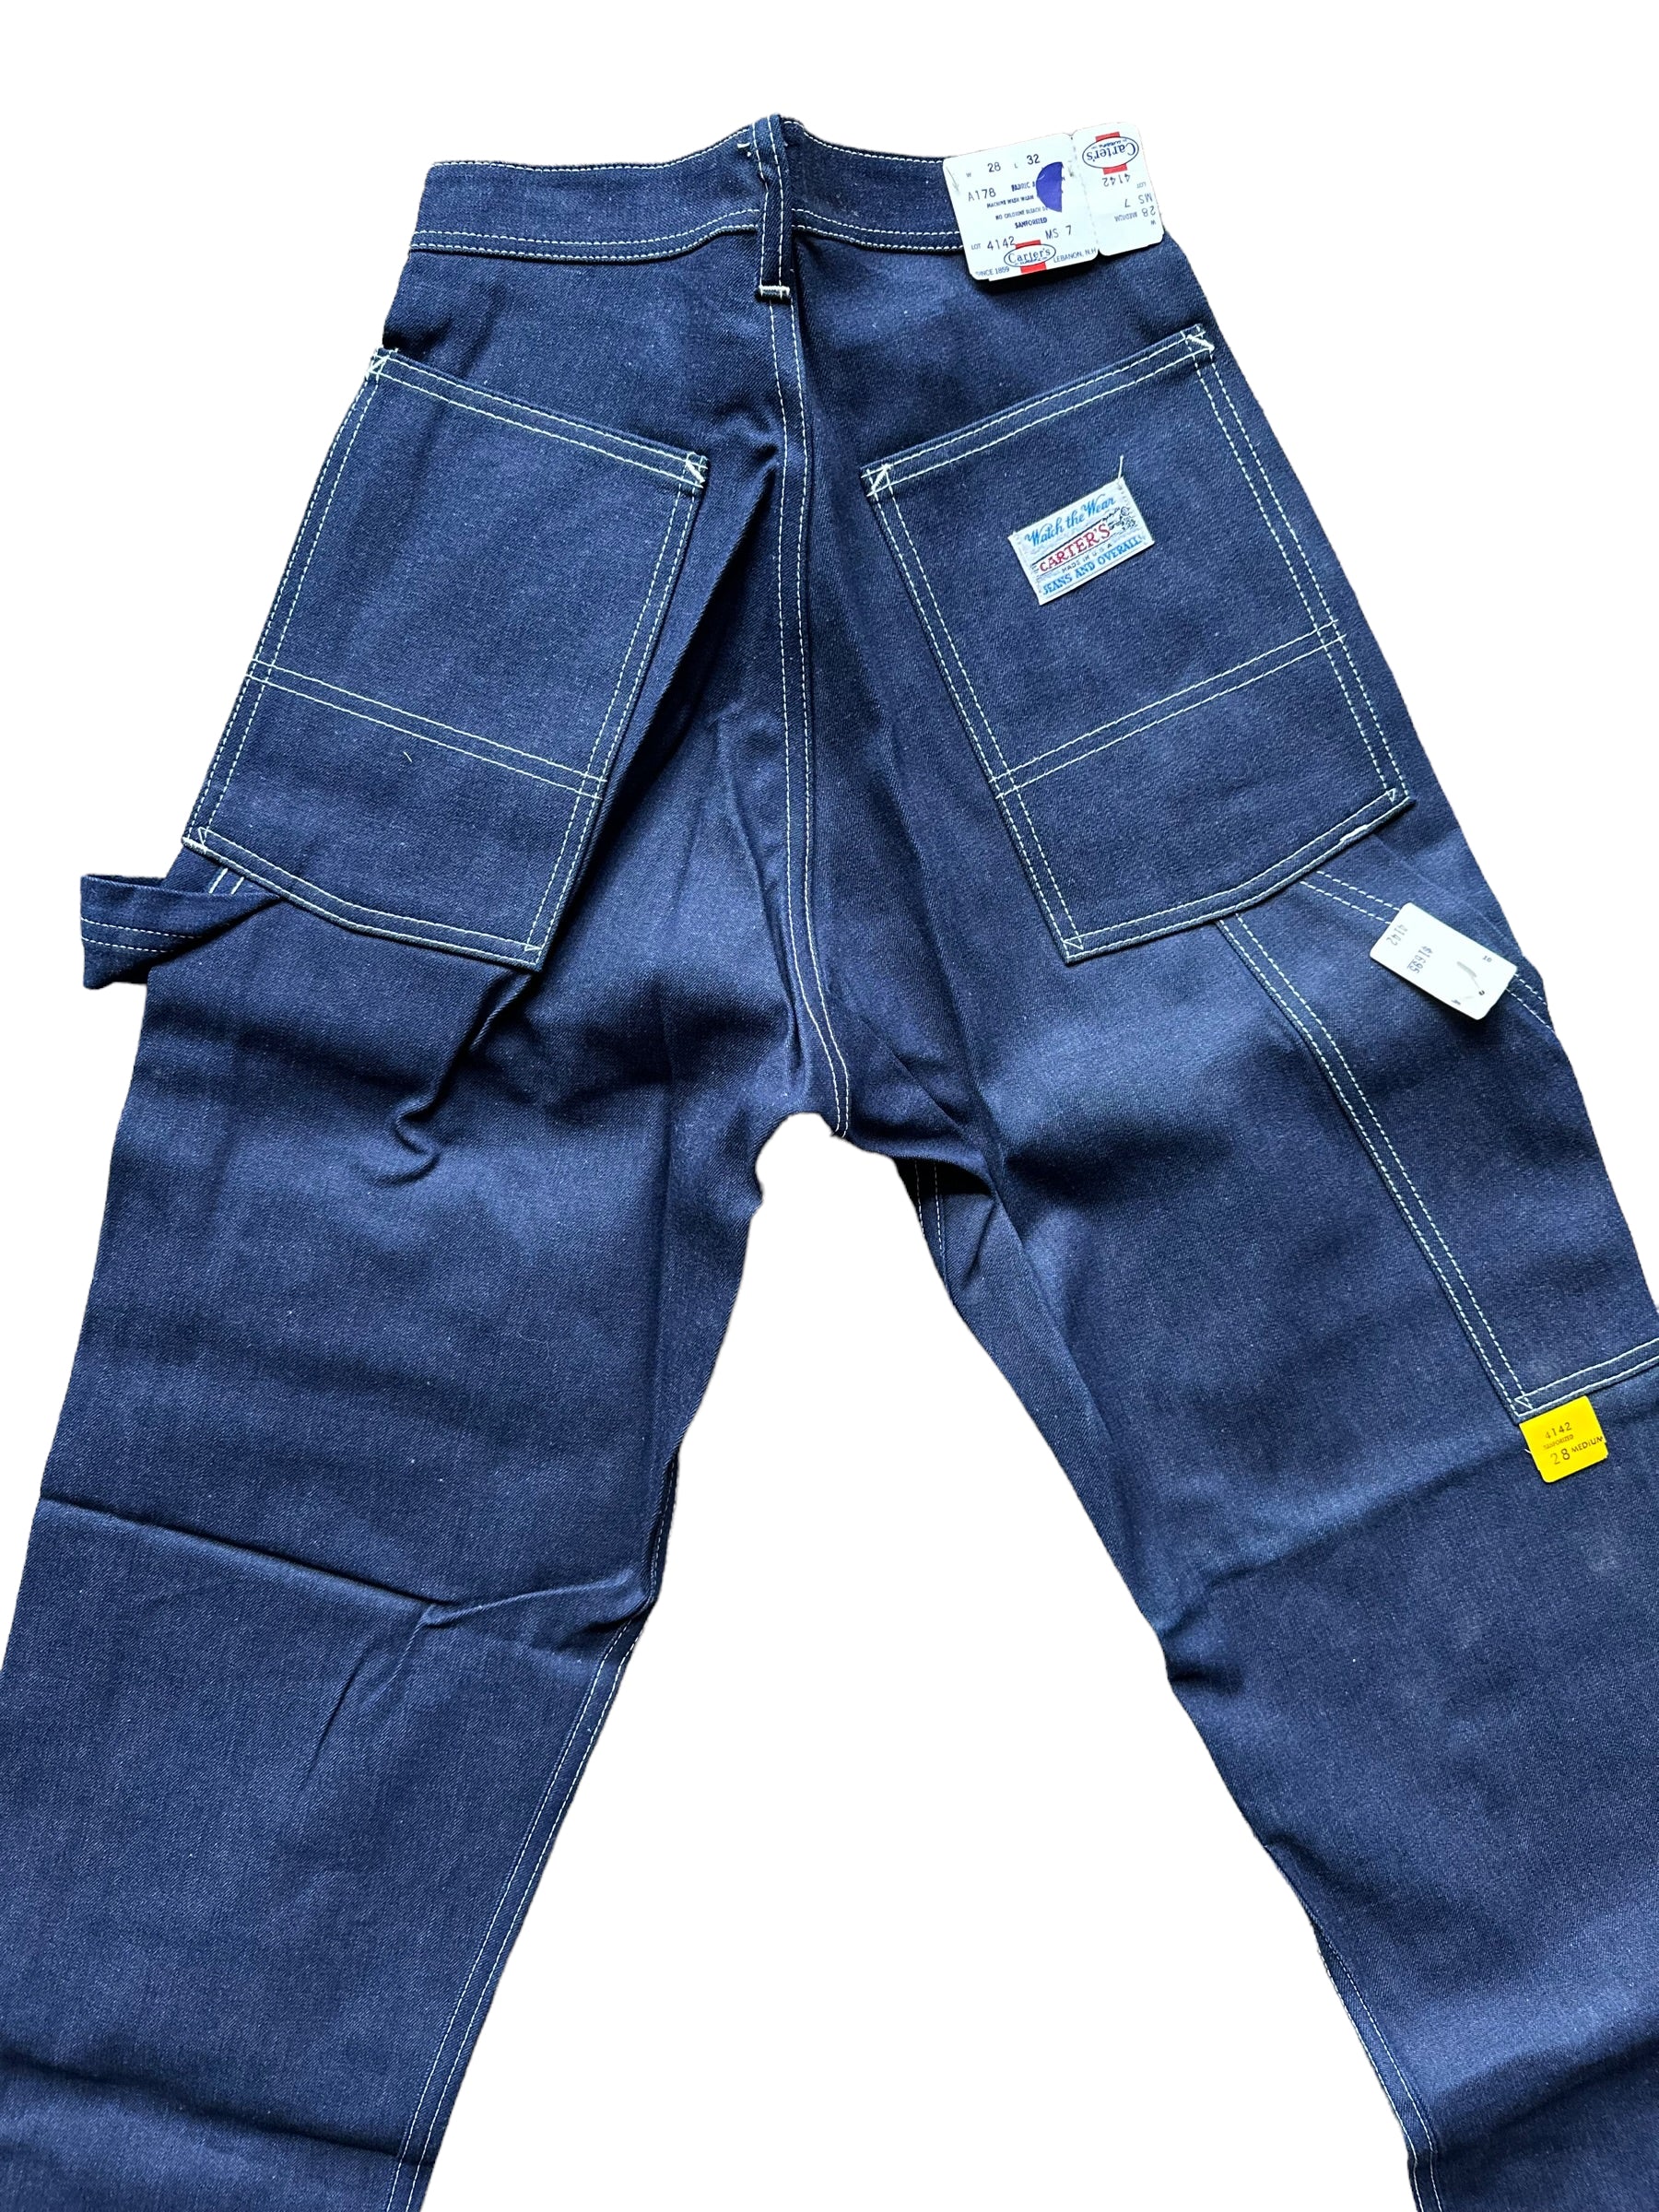 Upper Rear View on NOS Vintage Carter's Carpenter Jeans W28 L32 | Barn Owl Vintage Workwear Seattle